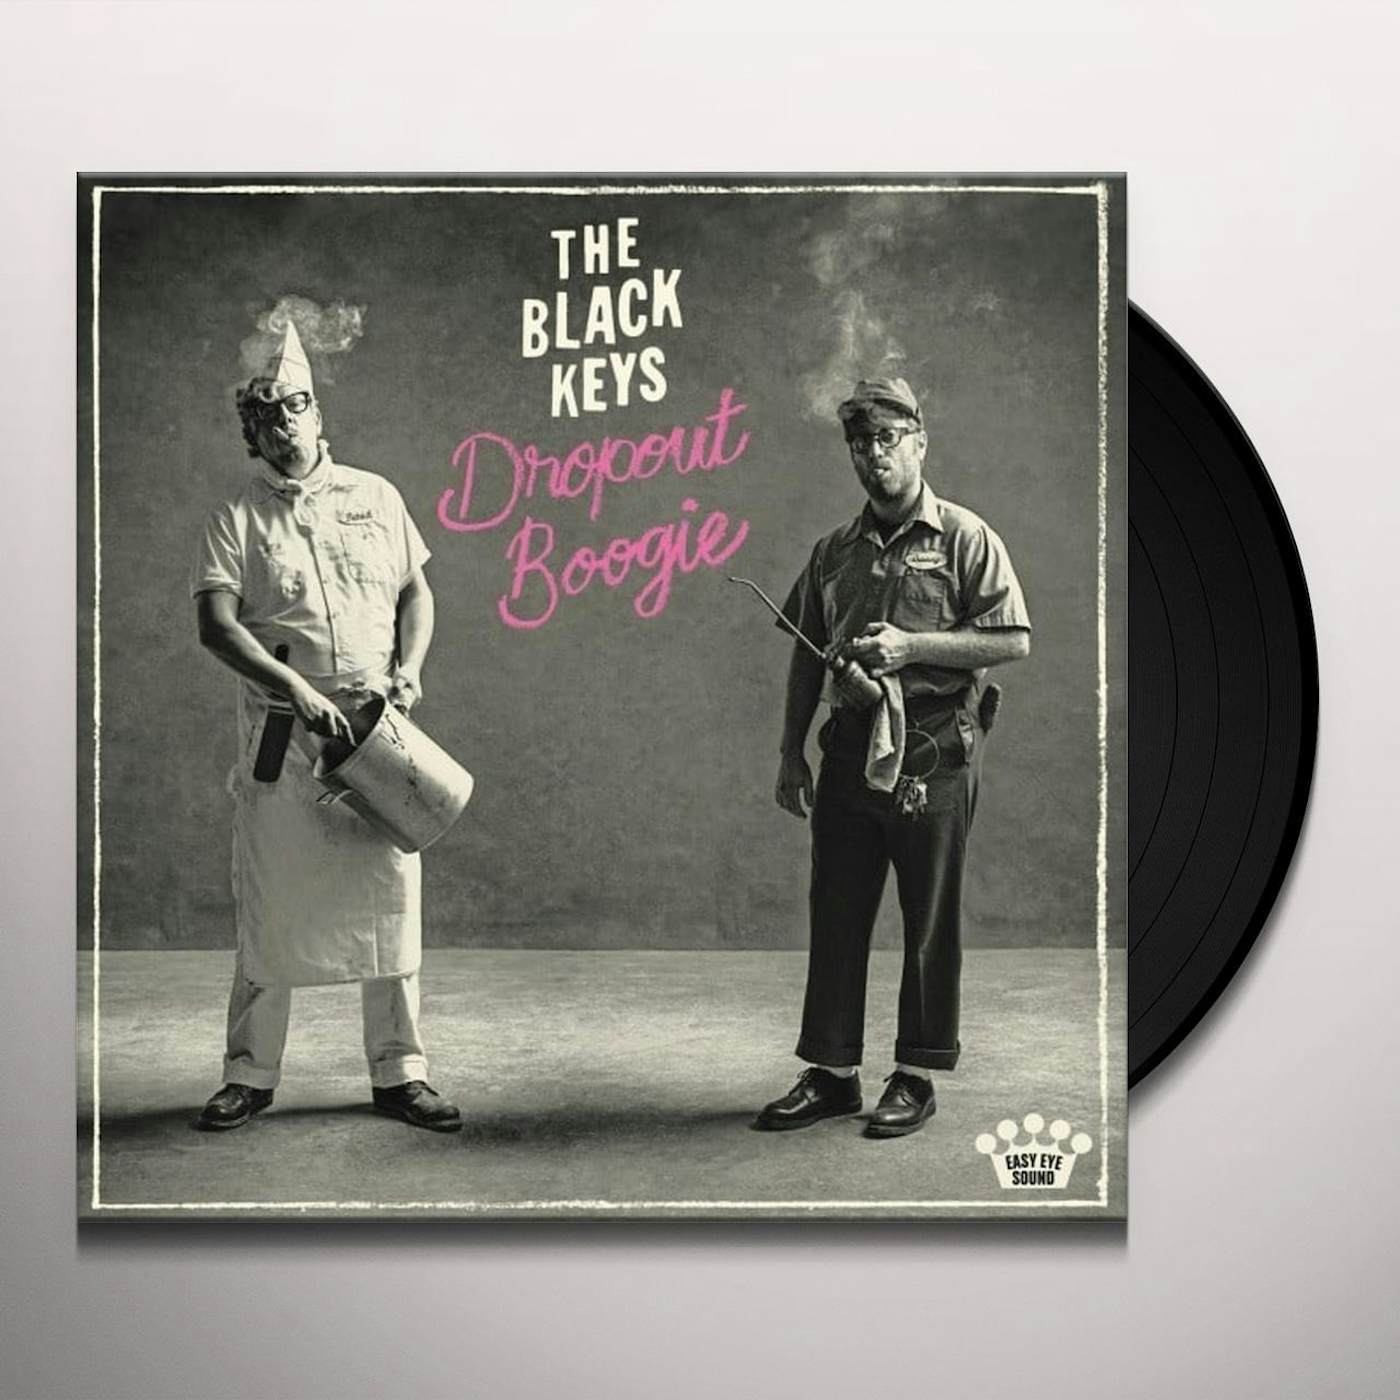 The Black Keys Dropout Boogie Vinyl Record